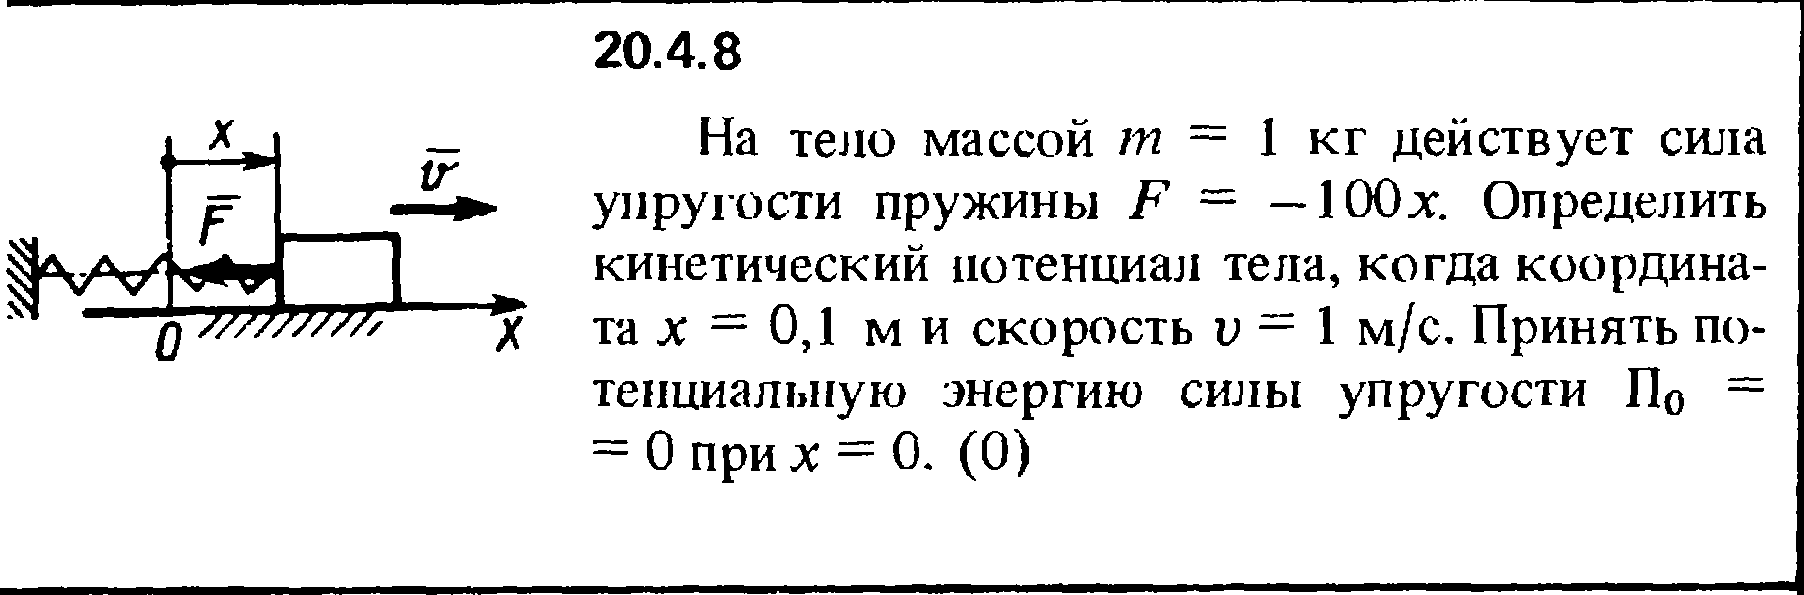 Решение 20.4.8 из сборника (решебника) Кепе О.Е. 1989